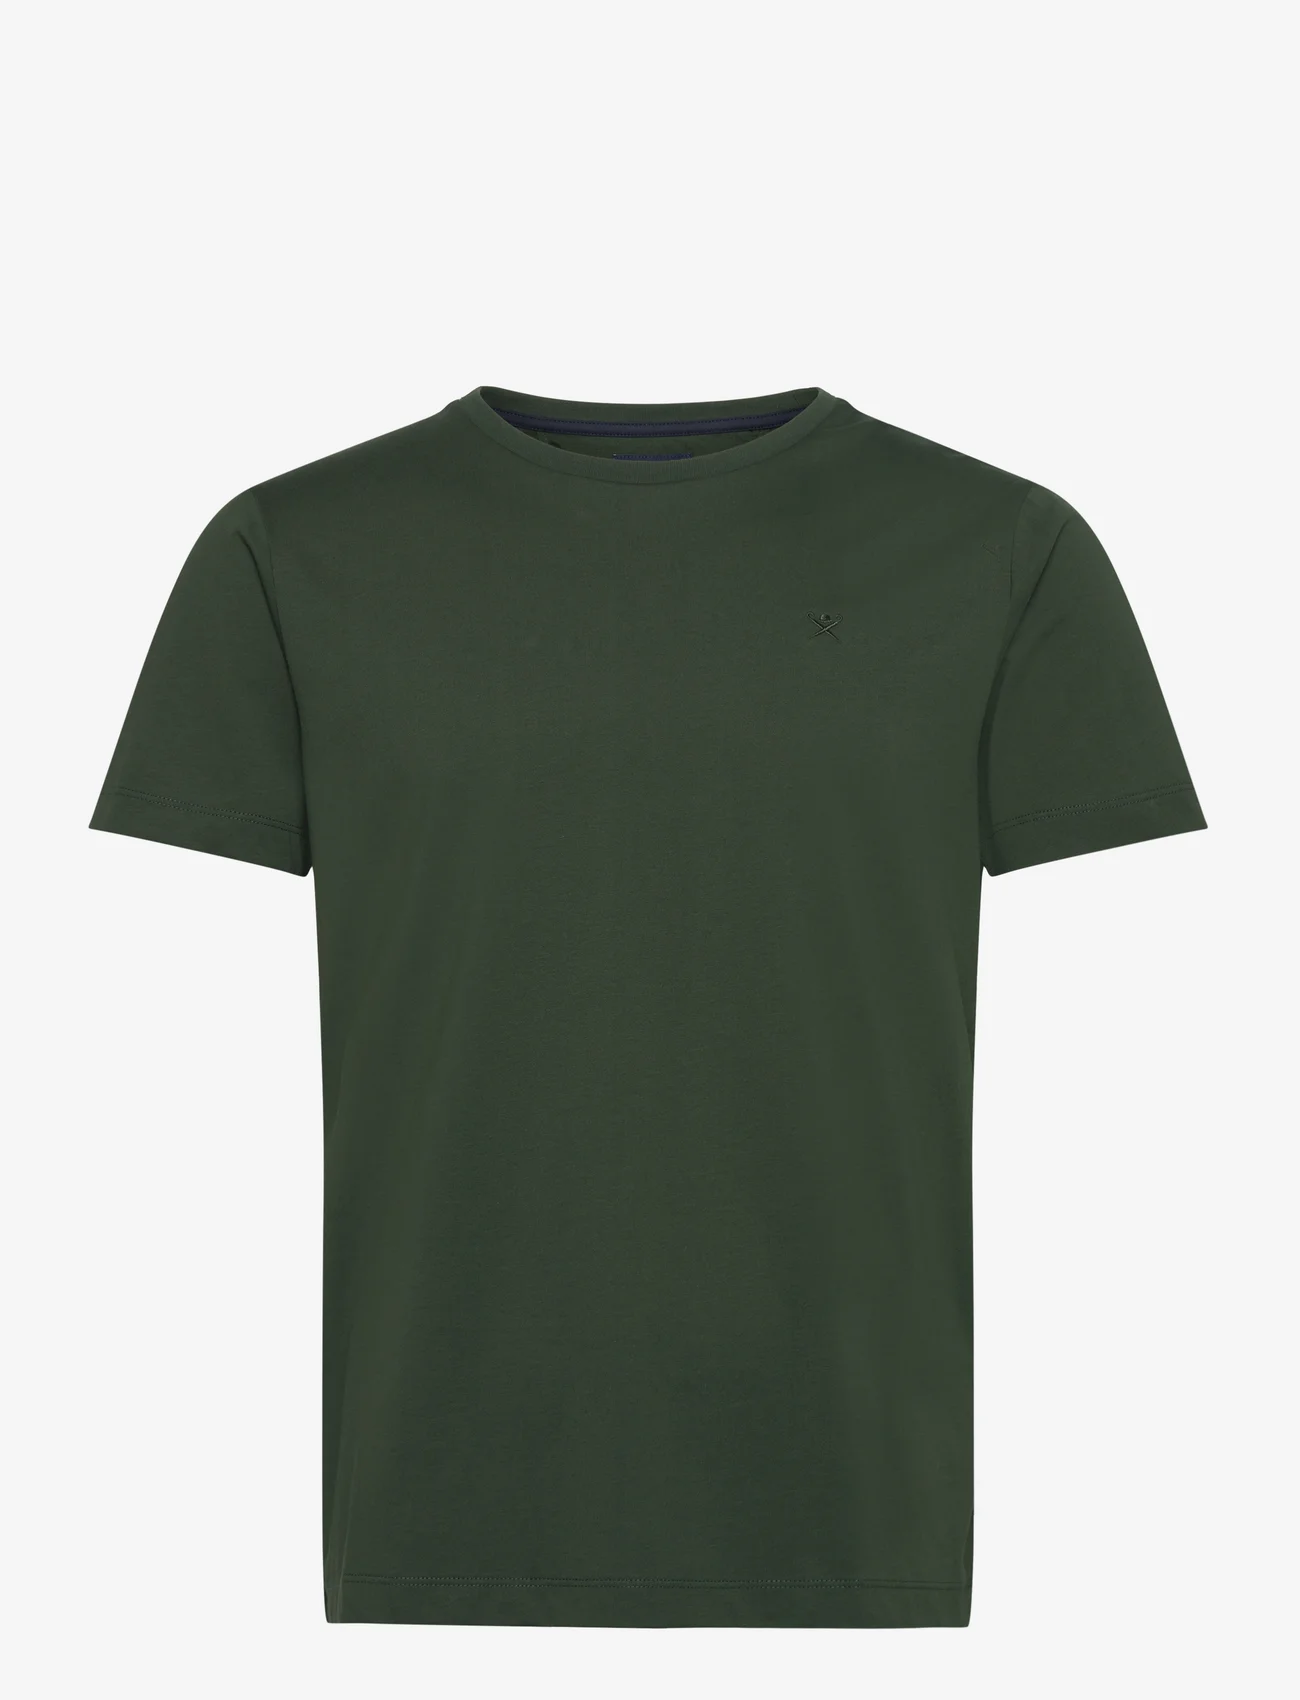 Hackett London - PIMA COTTON TEE - basic t-shirts - dark green - 0